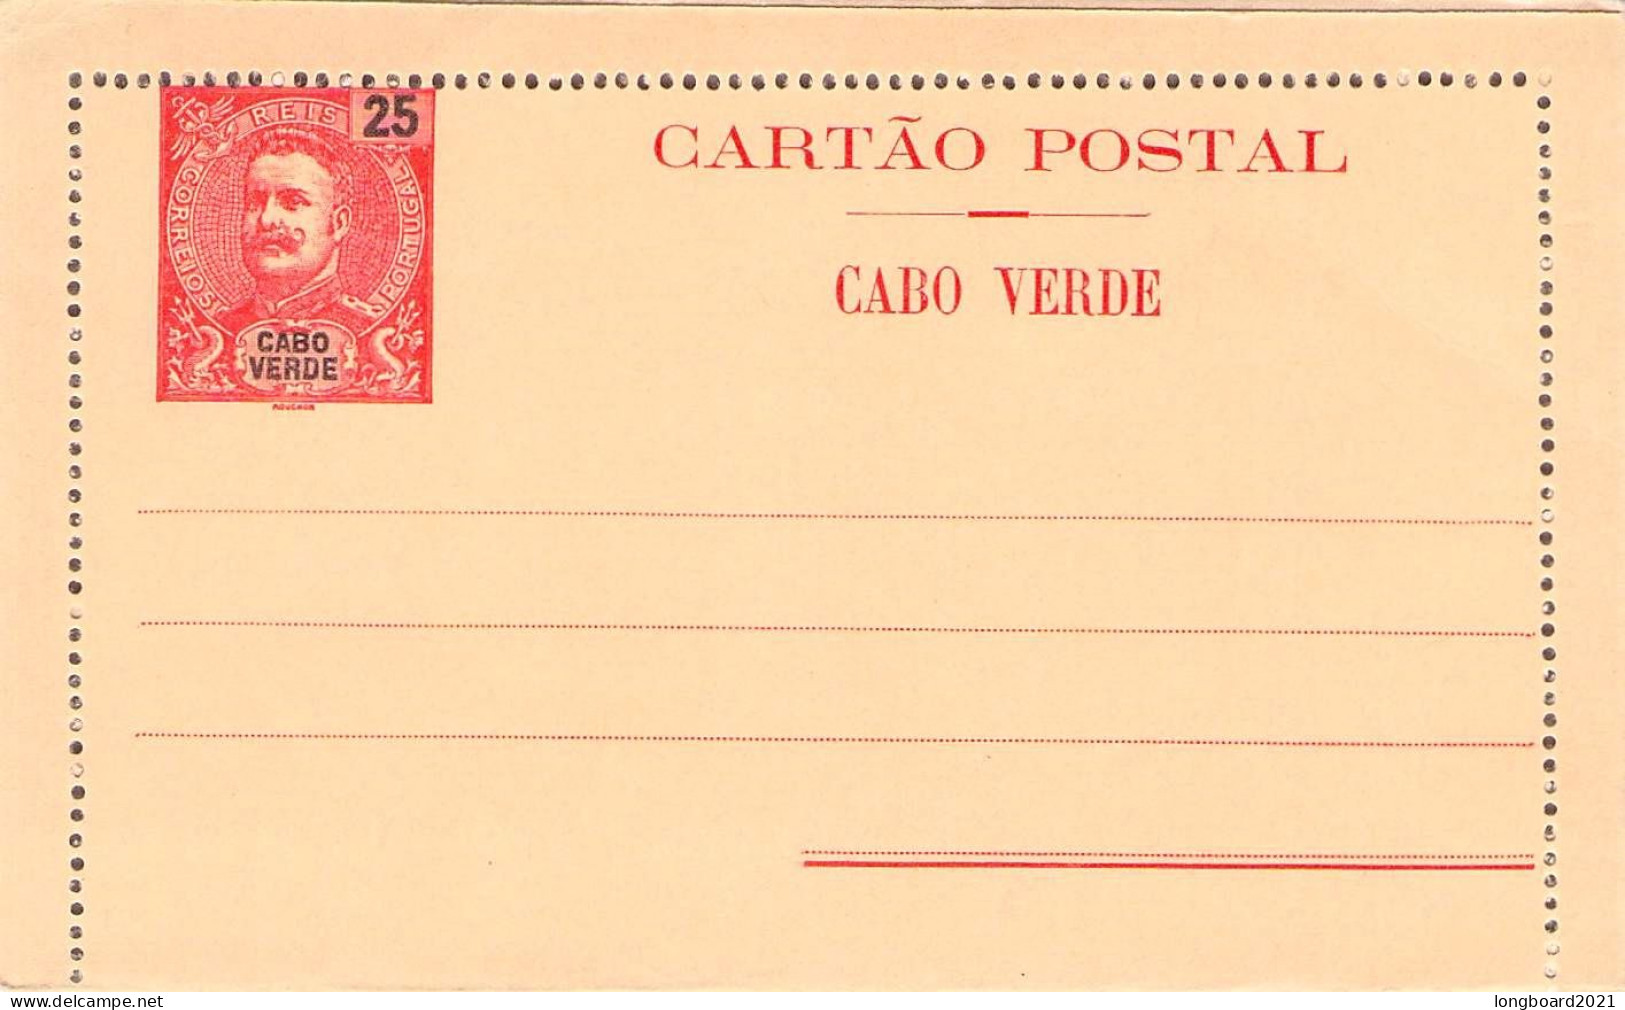 CABO VERDE - CARTAO POSTAL 25 REIS Unc / *2064 - Kapverdische Inseln